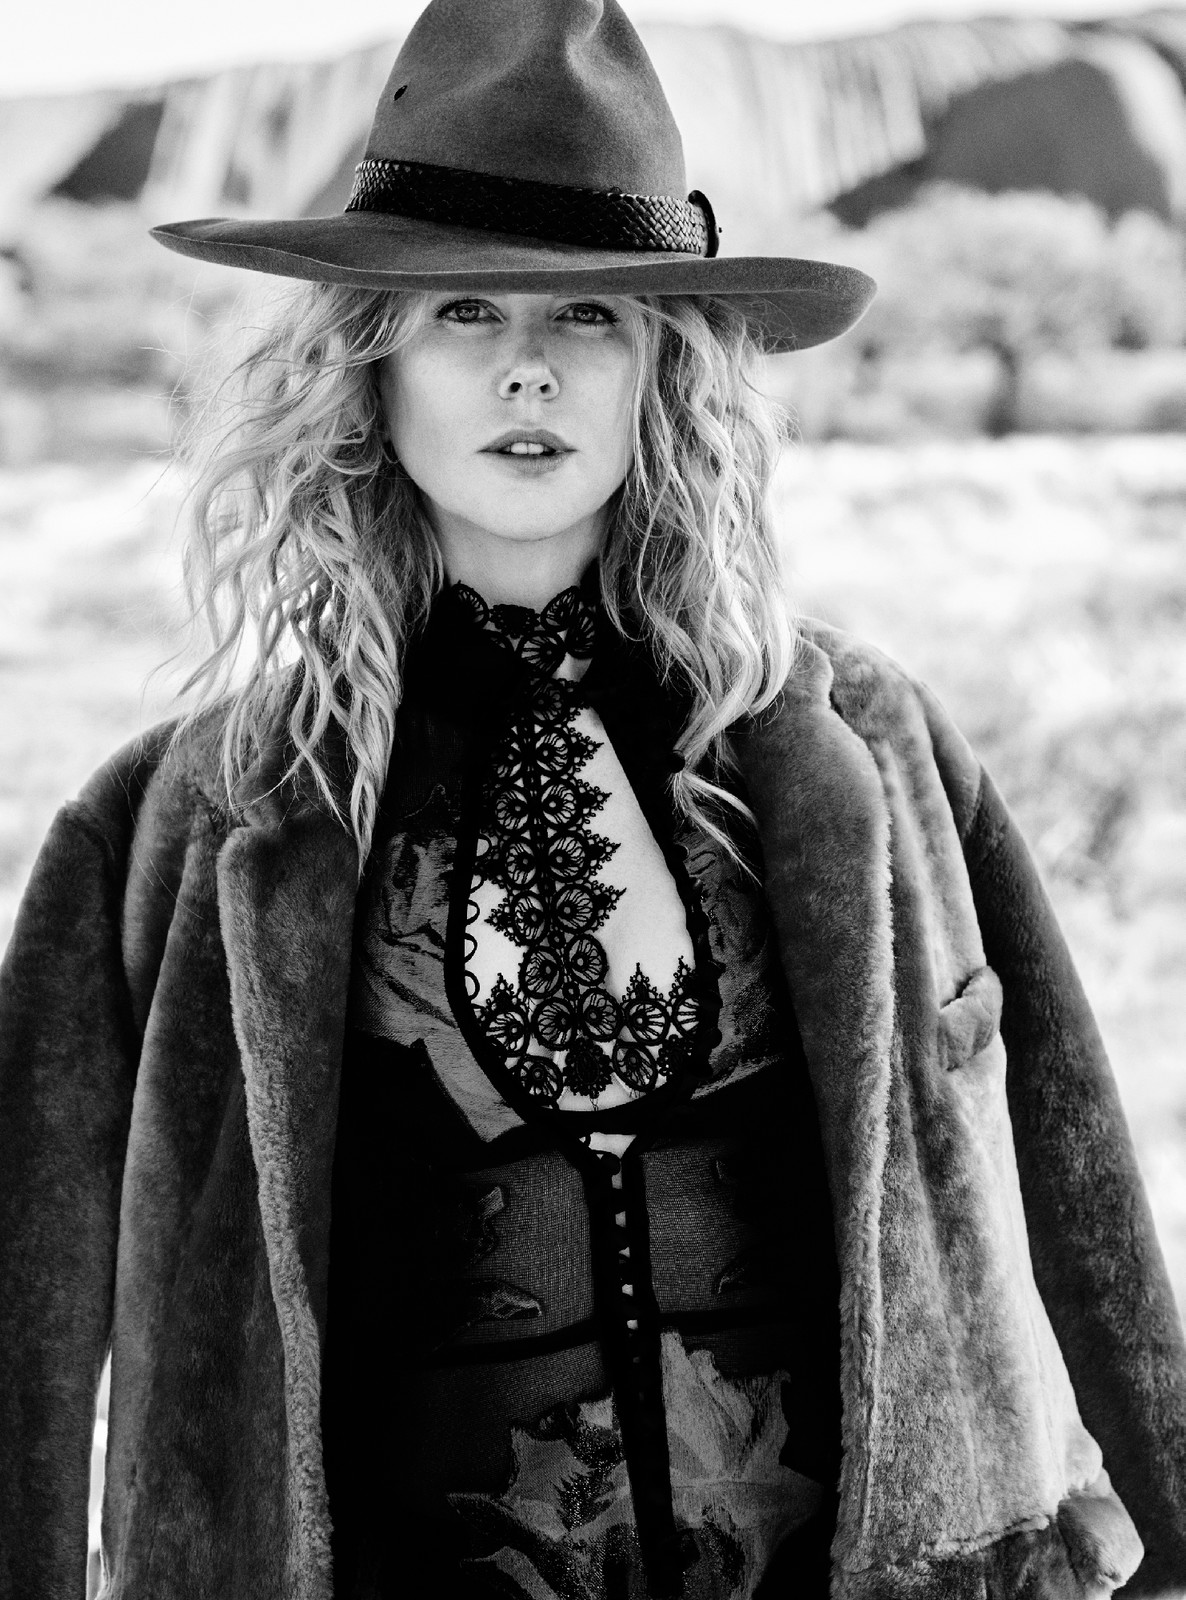 Nicole Kidman - Vogue Australia